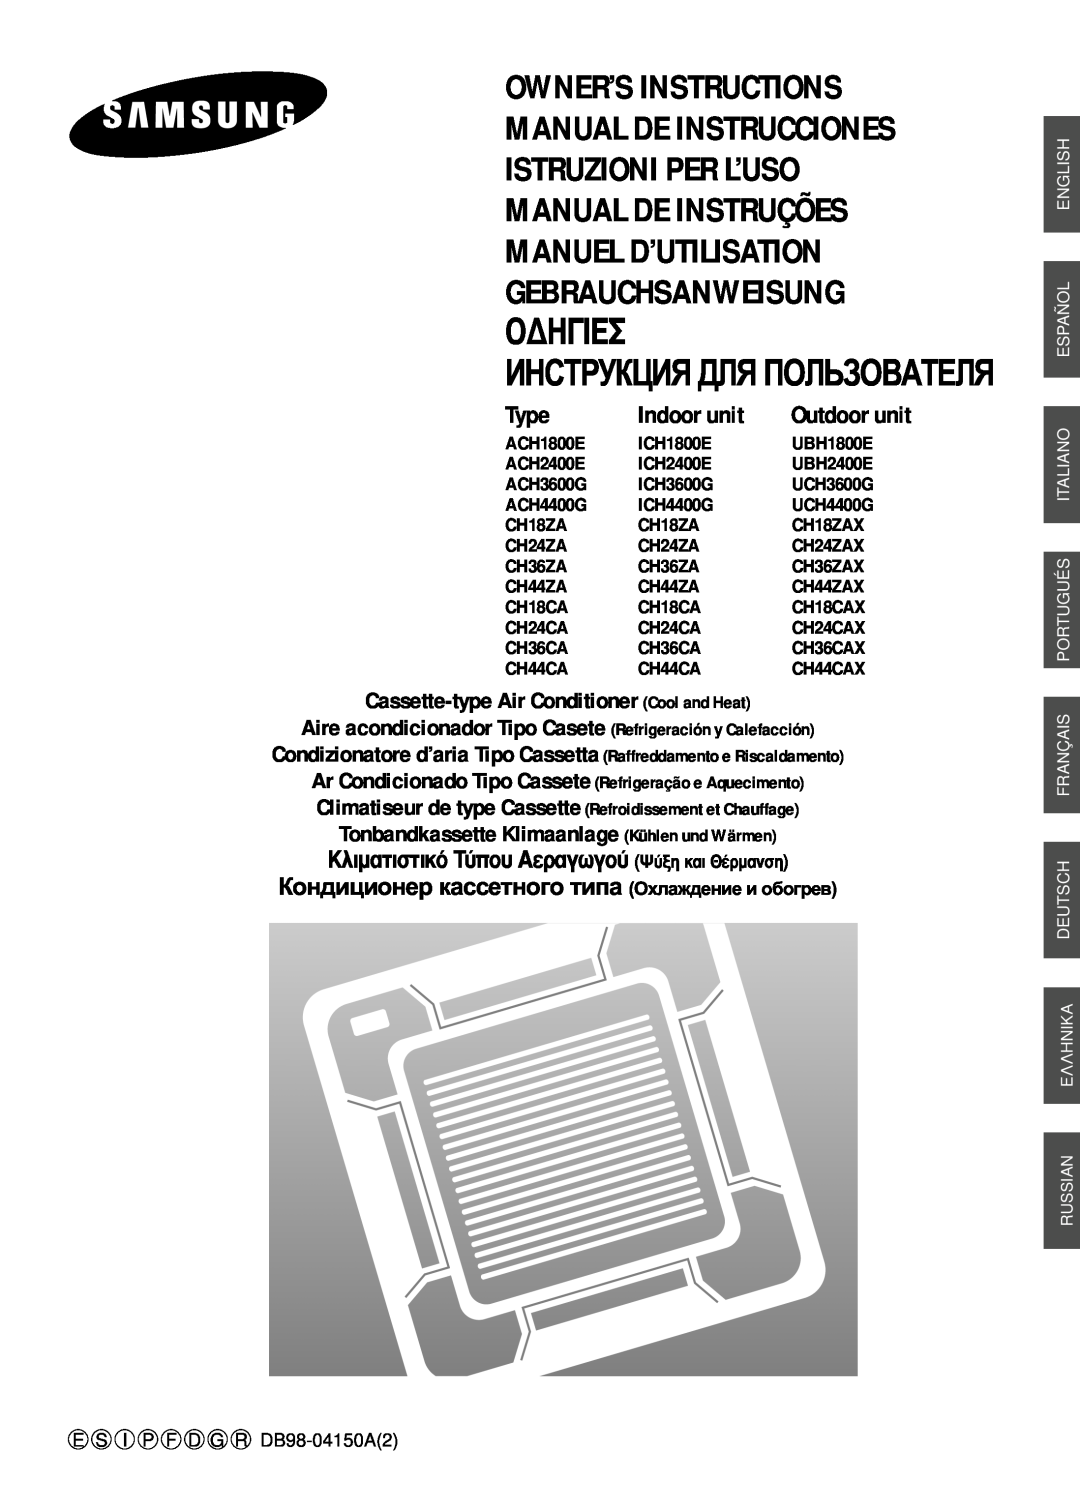 Samsung CH36ZAX, CH36CAX manuel dutilisation Type, Indoor unit, Owner’S Instructions Manual De Instrucciones, O¢Hie 